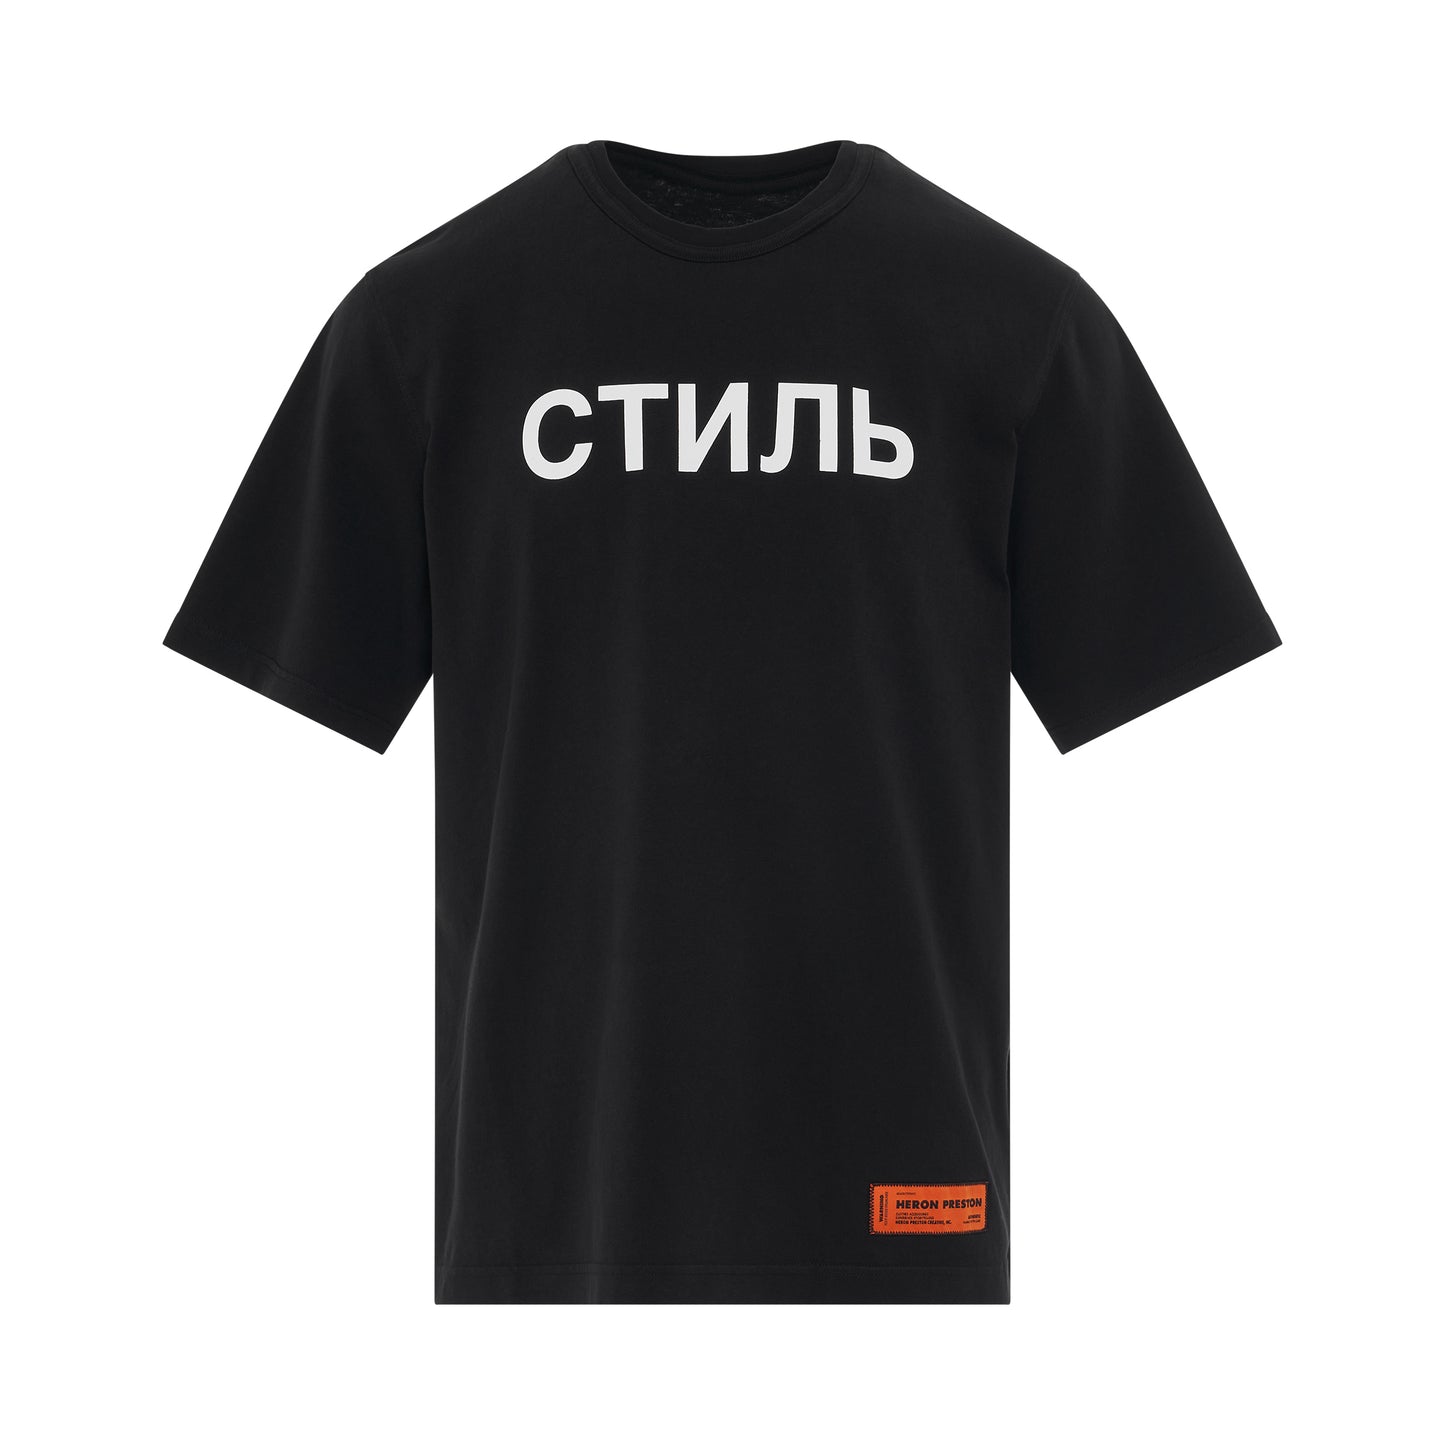 CTNMB Regular T-Shirt in Black